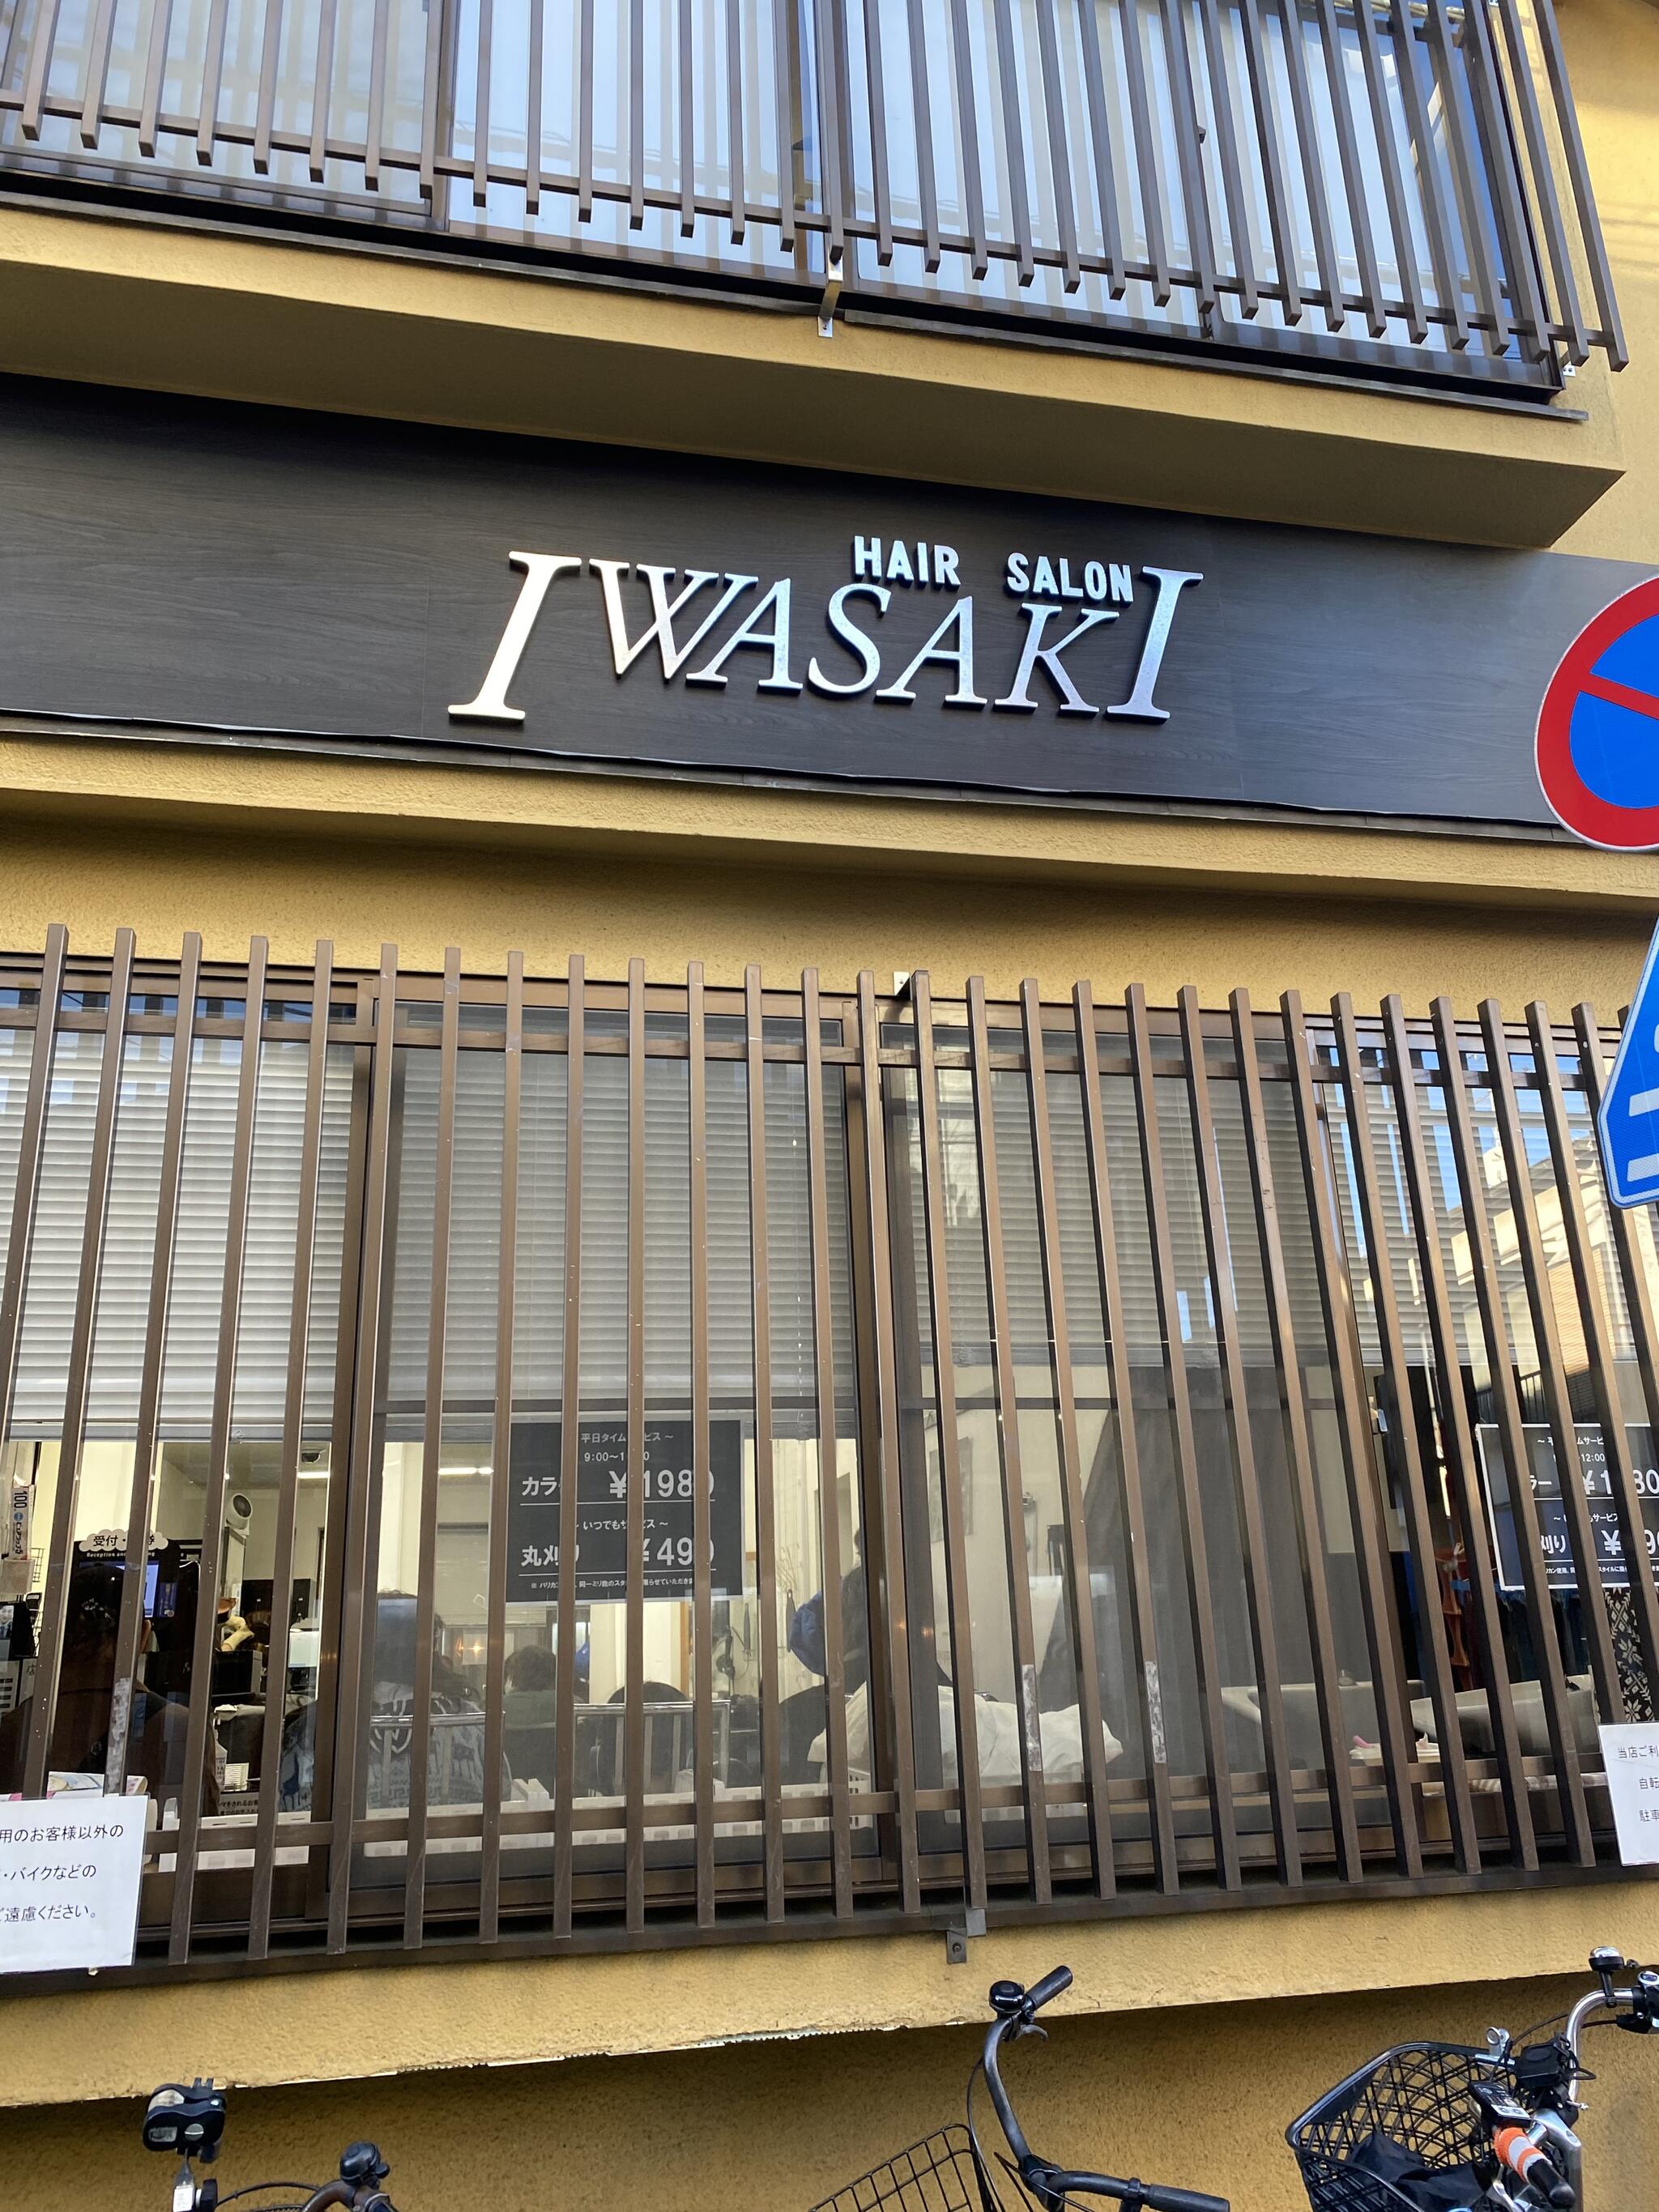 IWASAKI 東京祖師ヶ谷大蔵店の代表写真1